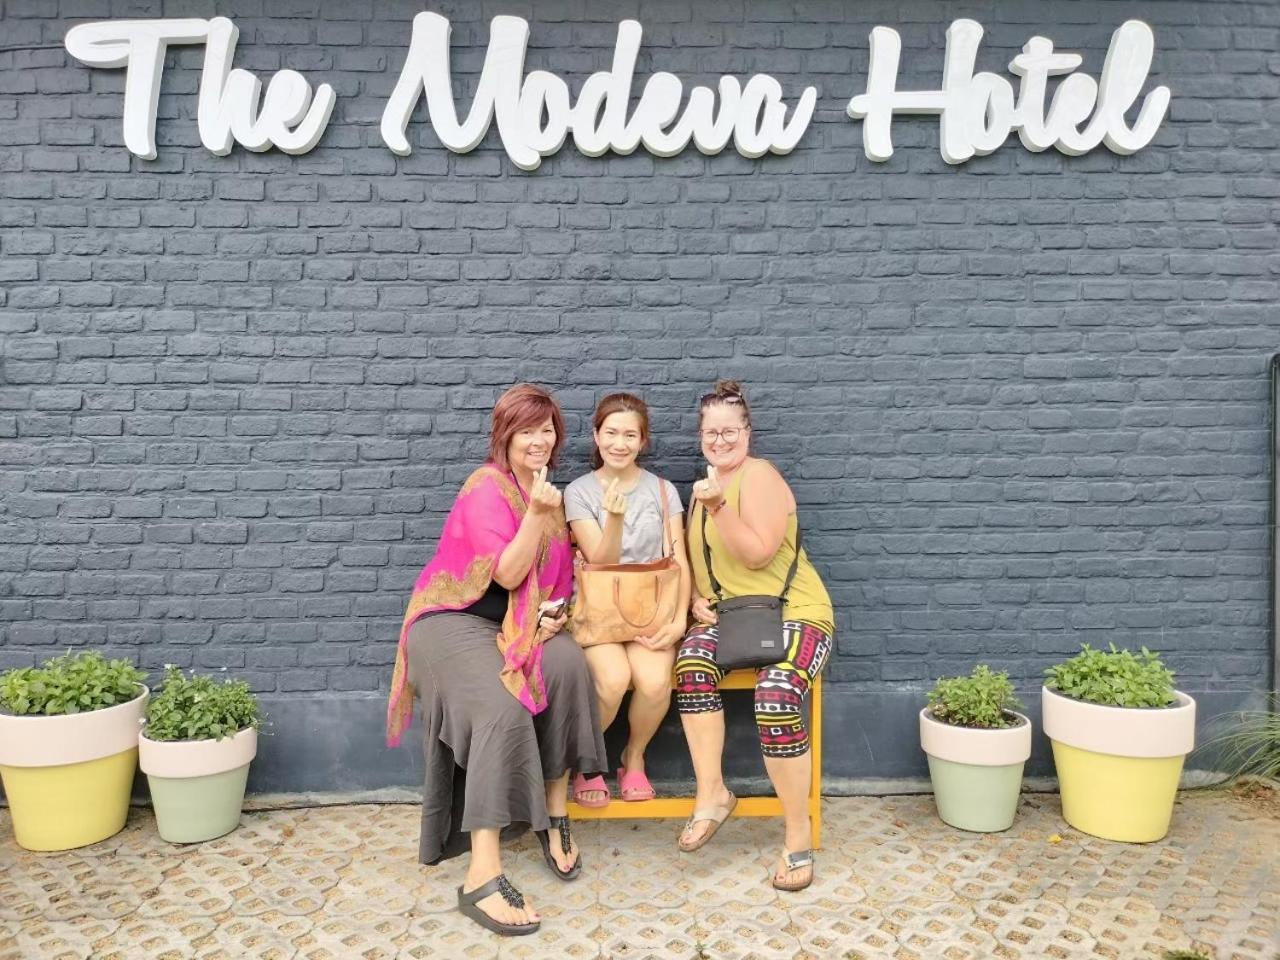 The Modeva Hotel 北碧府 外观 照片